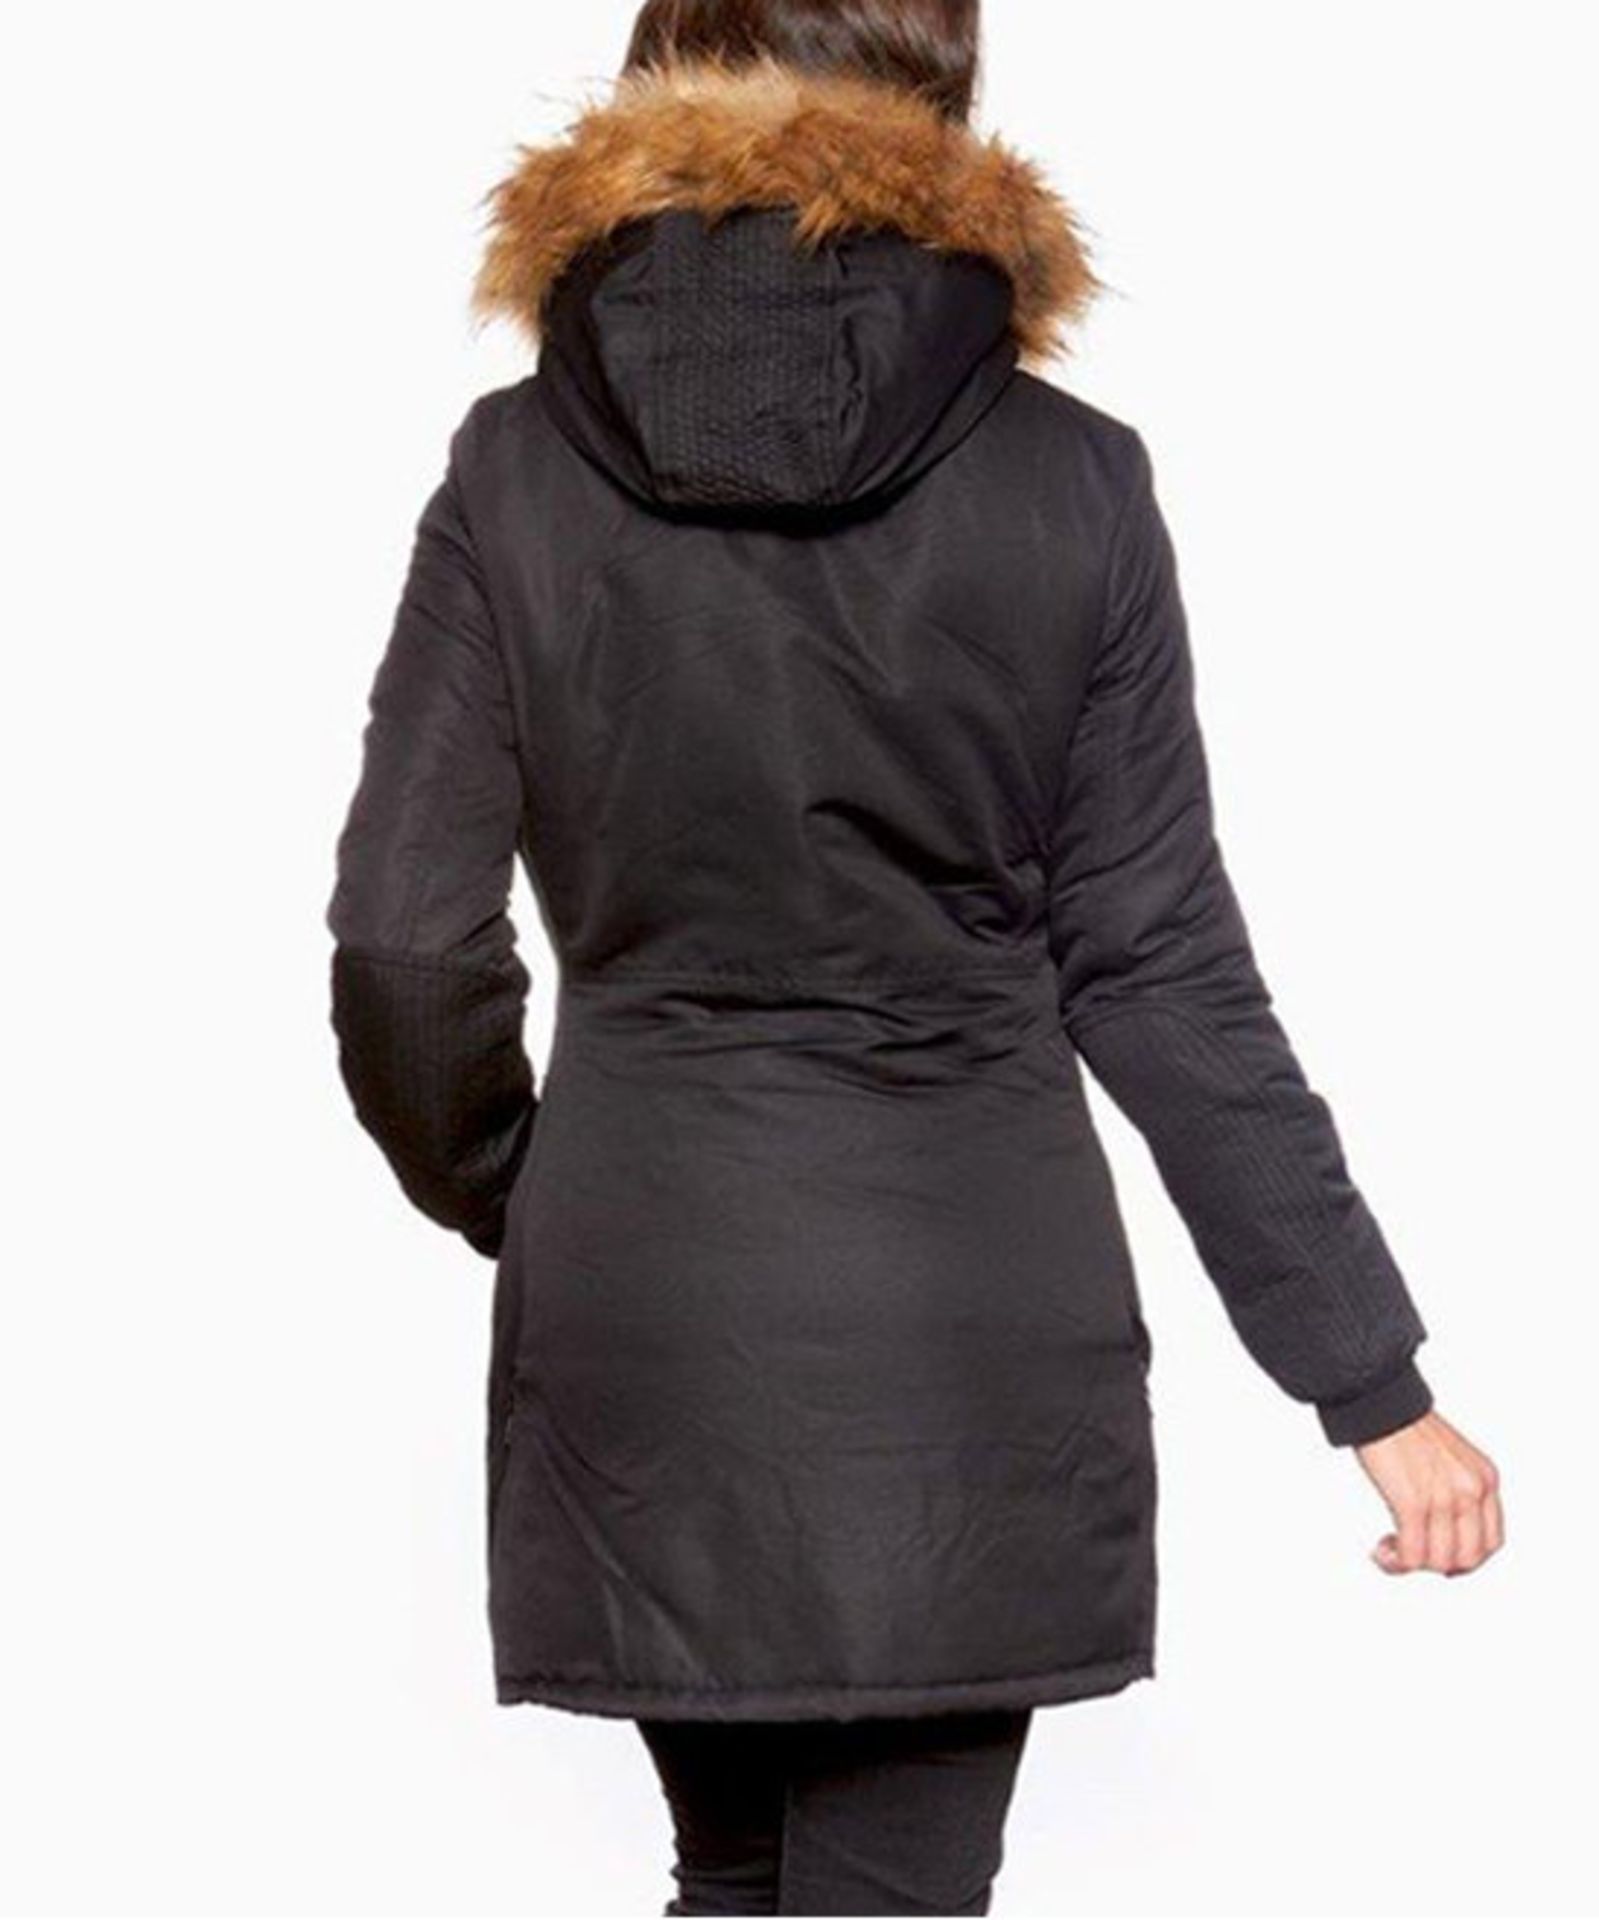 Black Faux Fur Hood Button-Up Coat - Plus Too (Us Size: 2XL) [Ref: 43802918] - Image 2 of 3